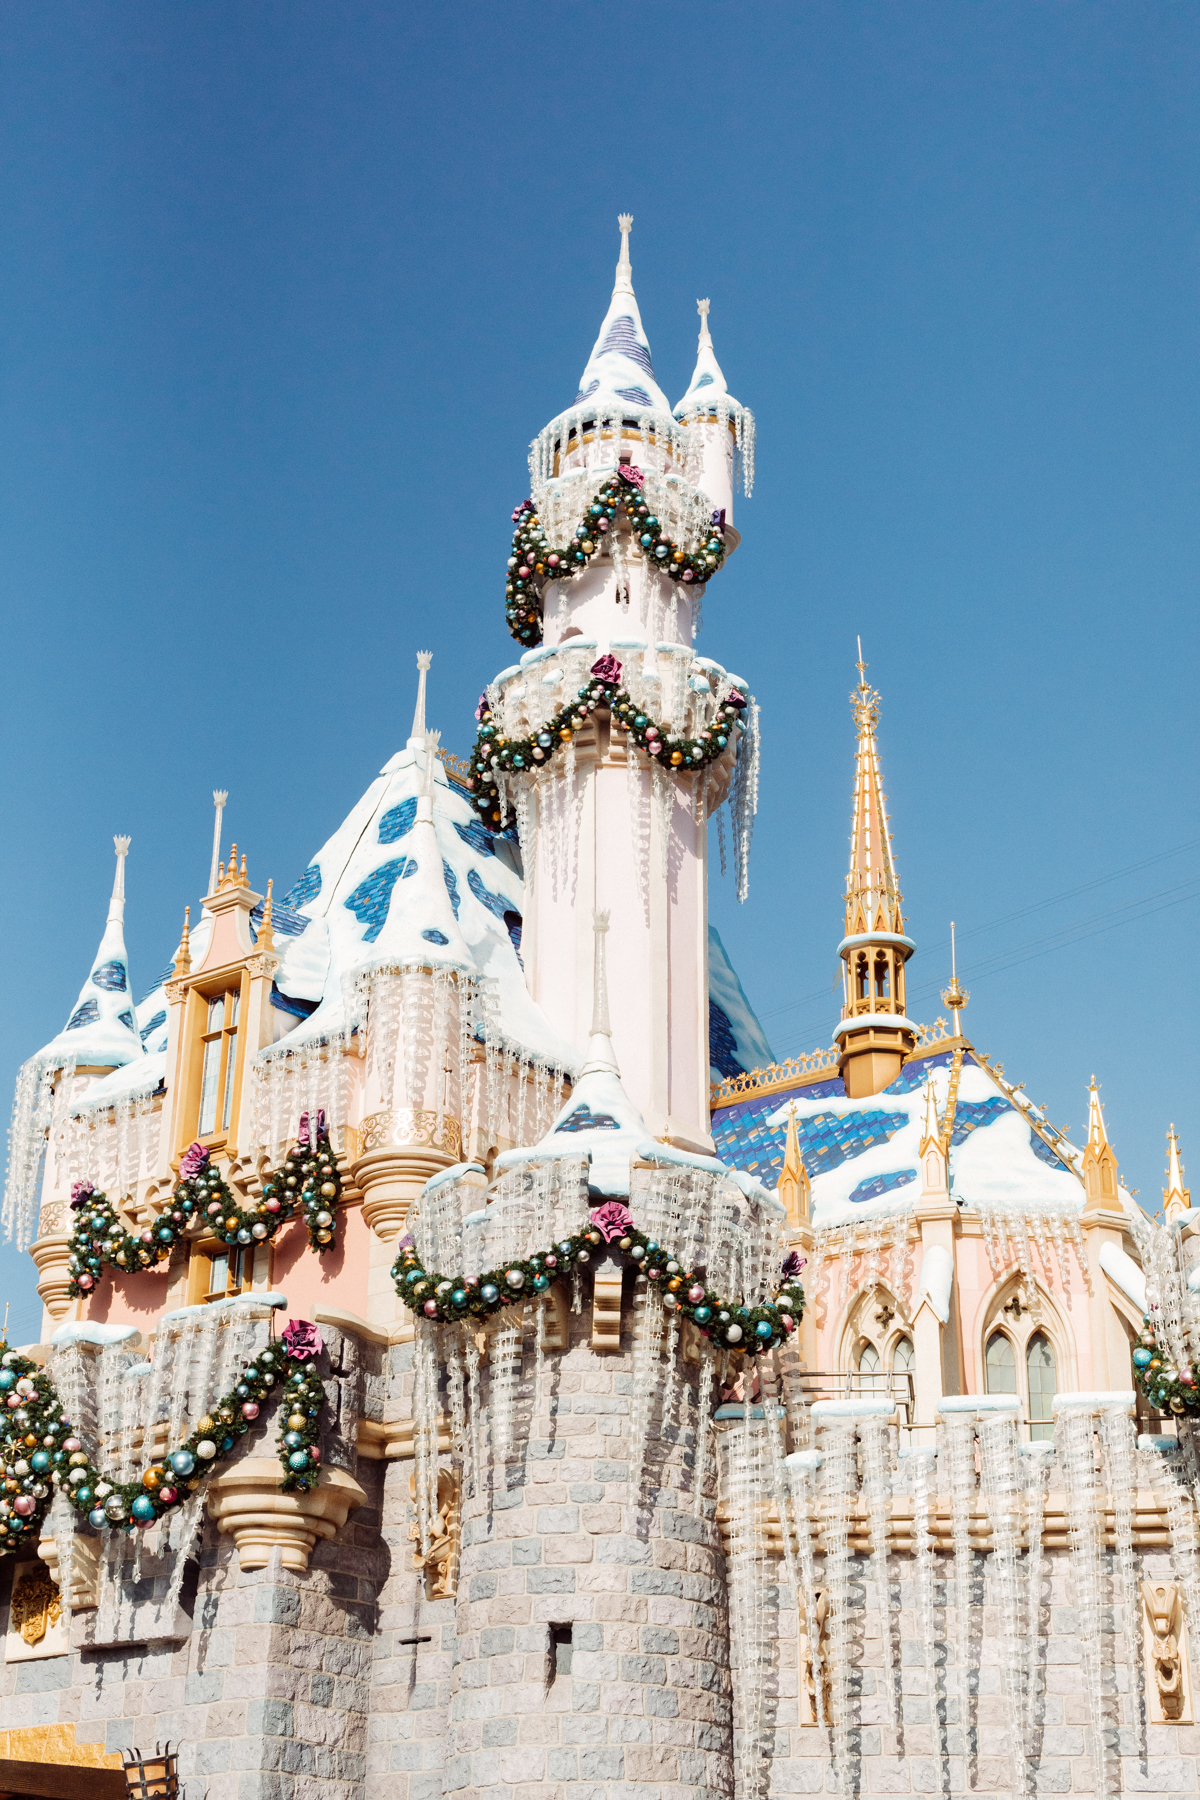 eatsleepwear kimberly lapides The holidays at Disneyland Resort holiday decor sleeping beauty's castle